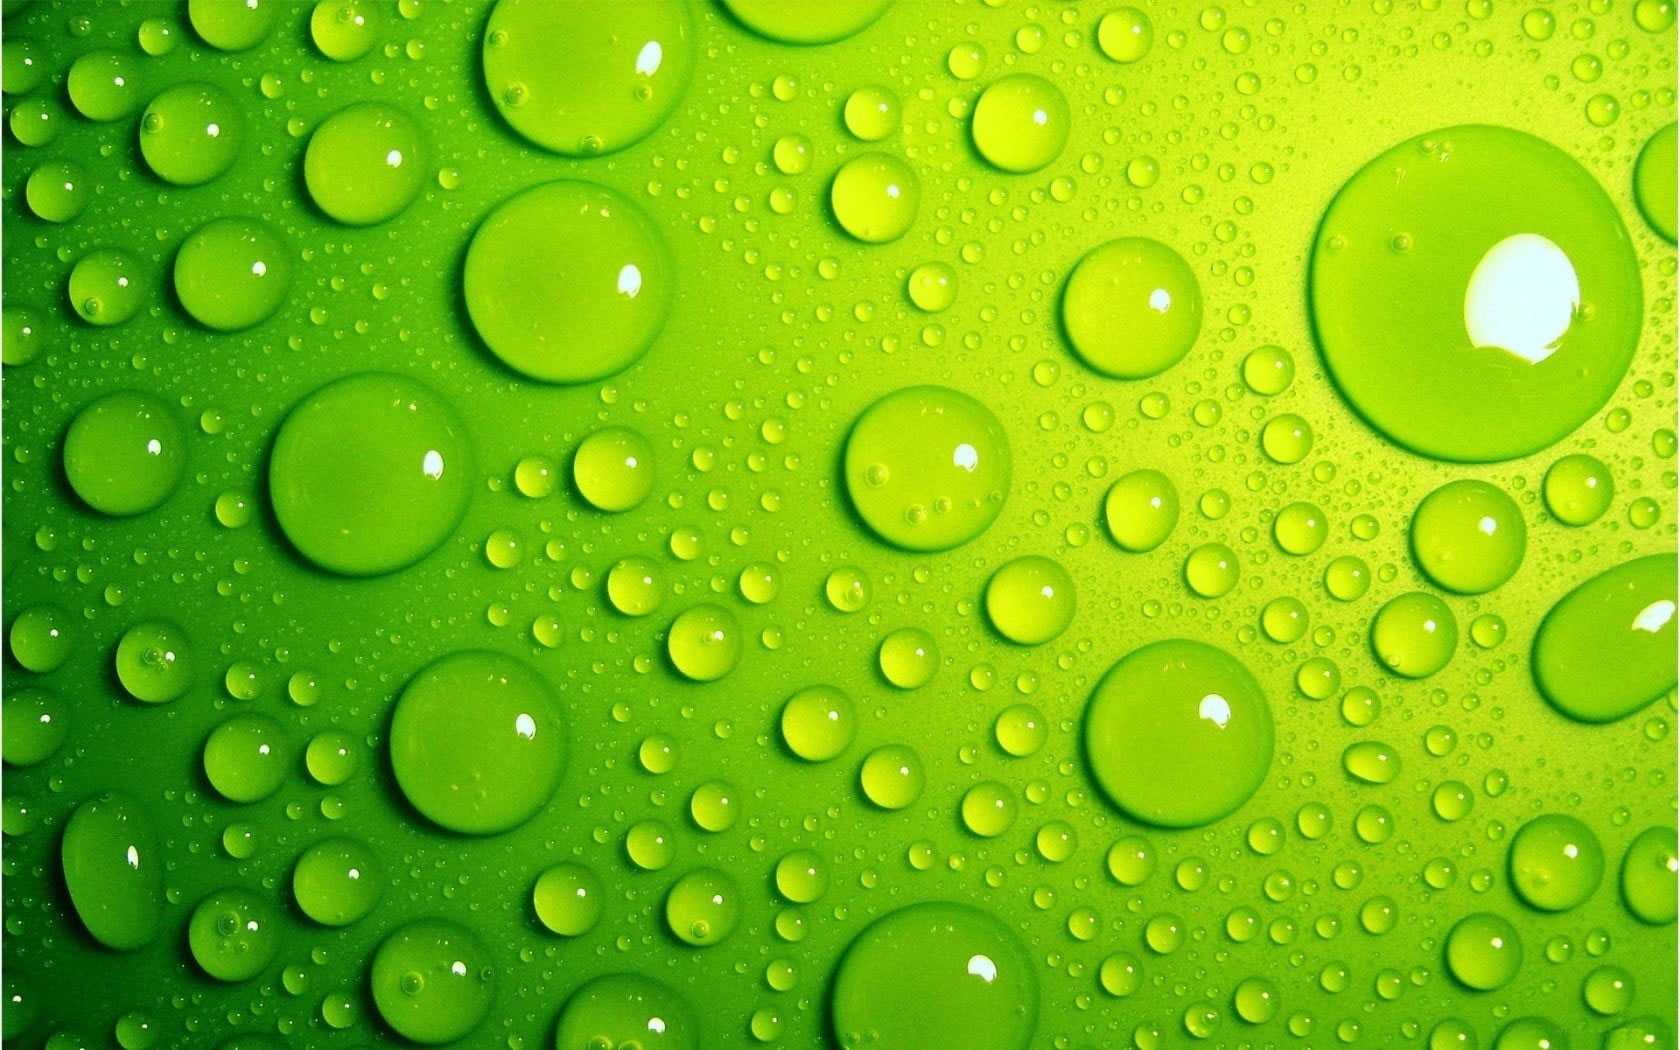 Water drops wallpaper, macro, green, wet, green color, close-up, backgrounds